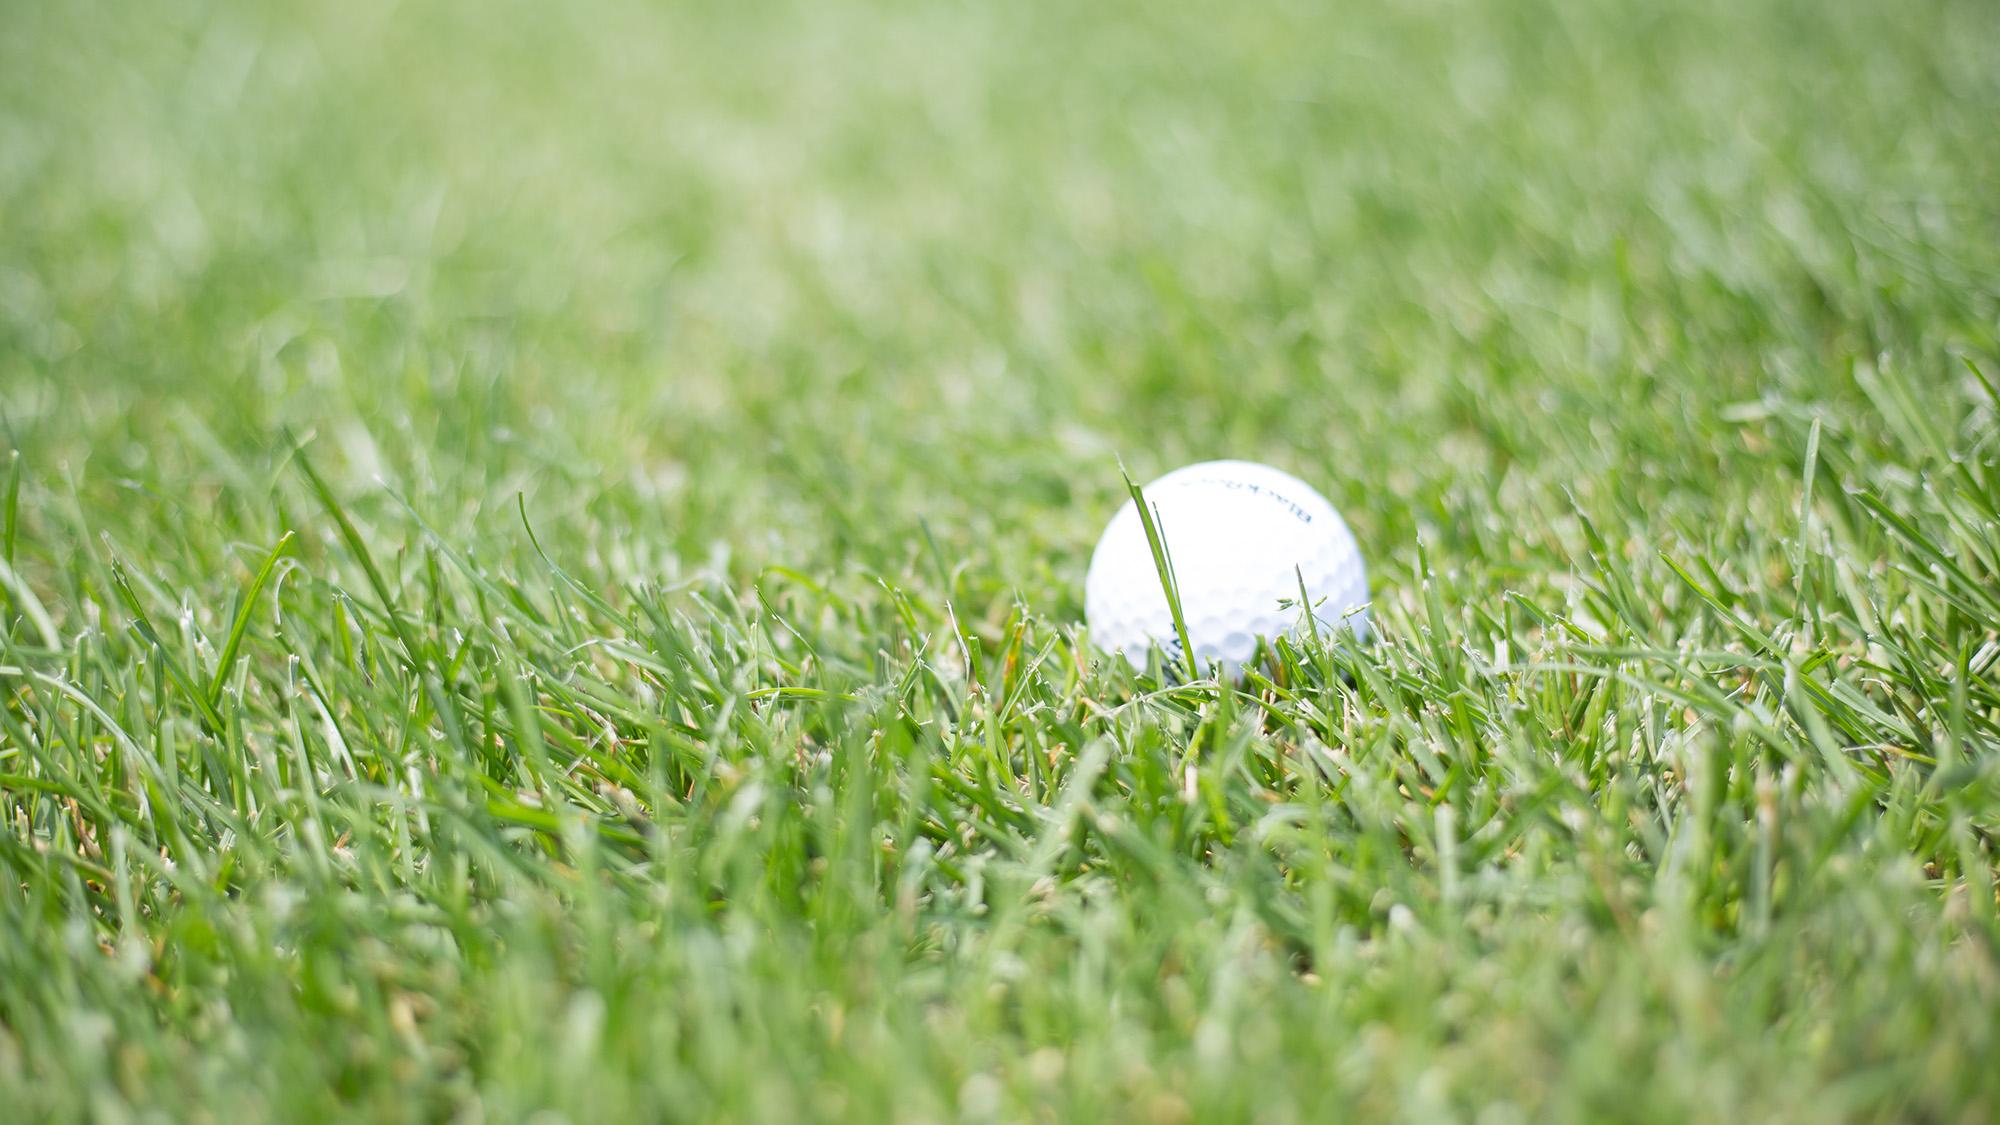 A golf ball sitting in grass.